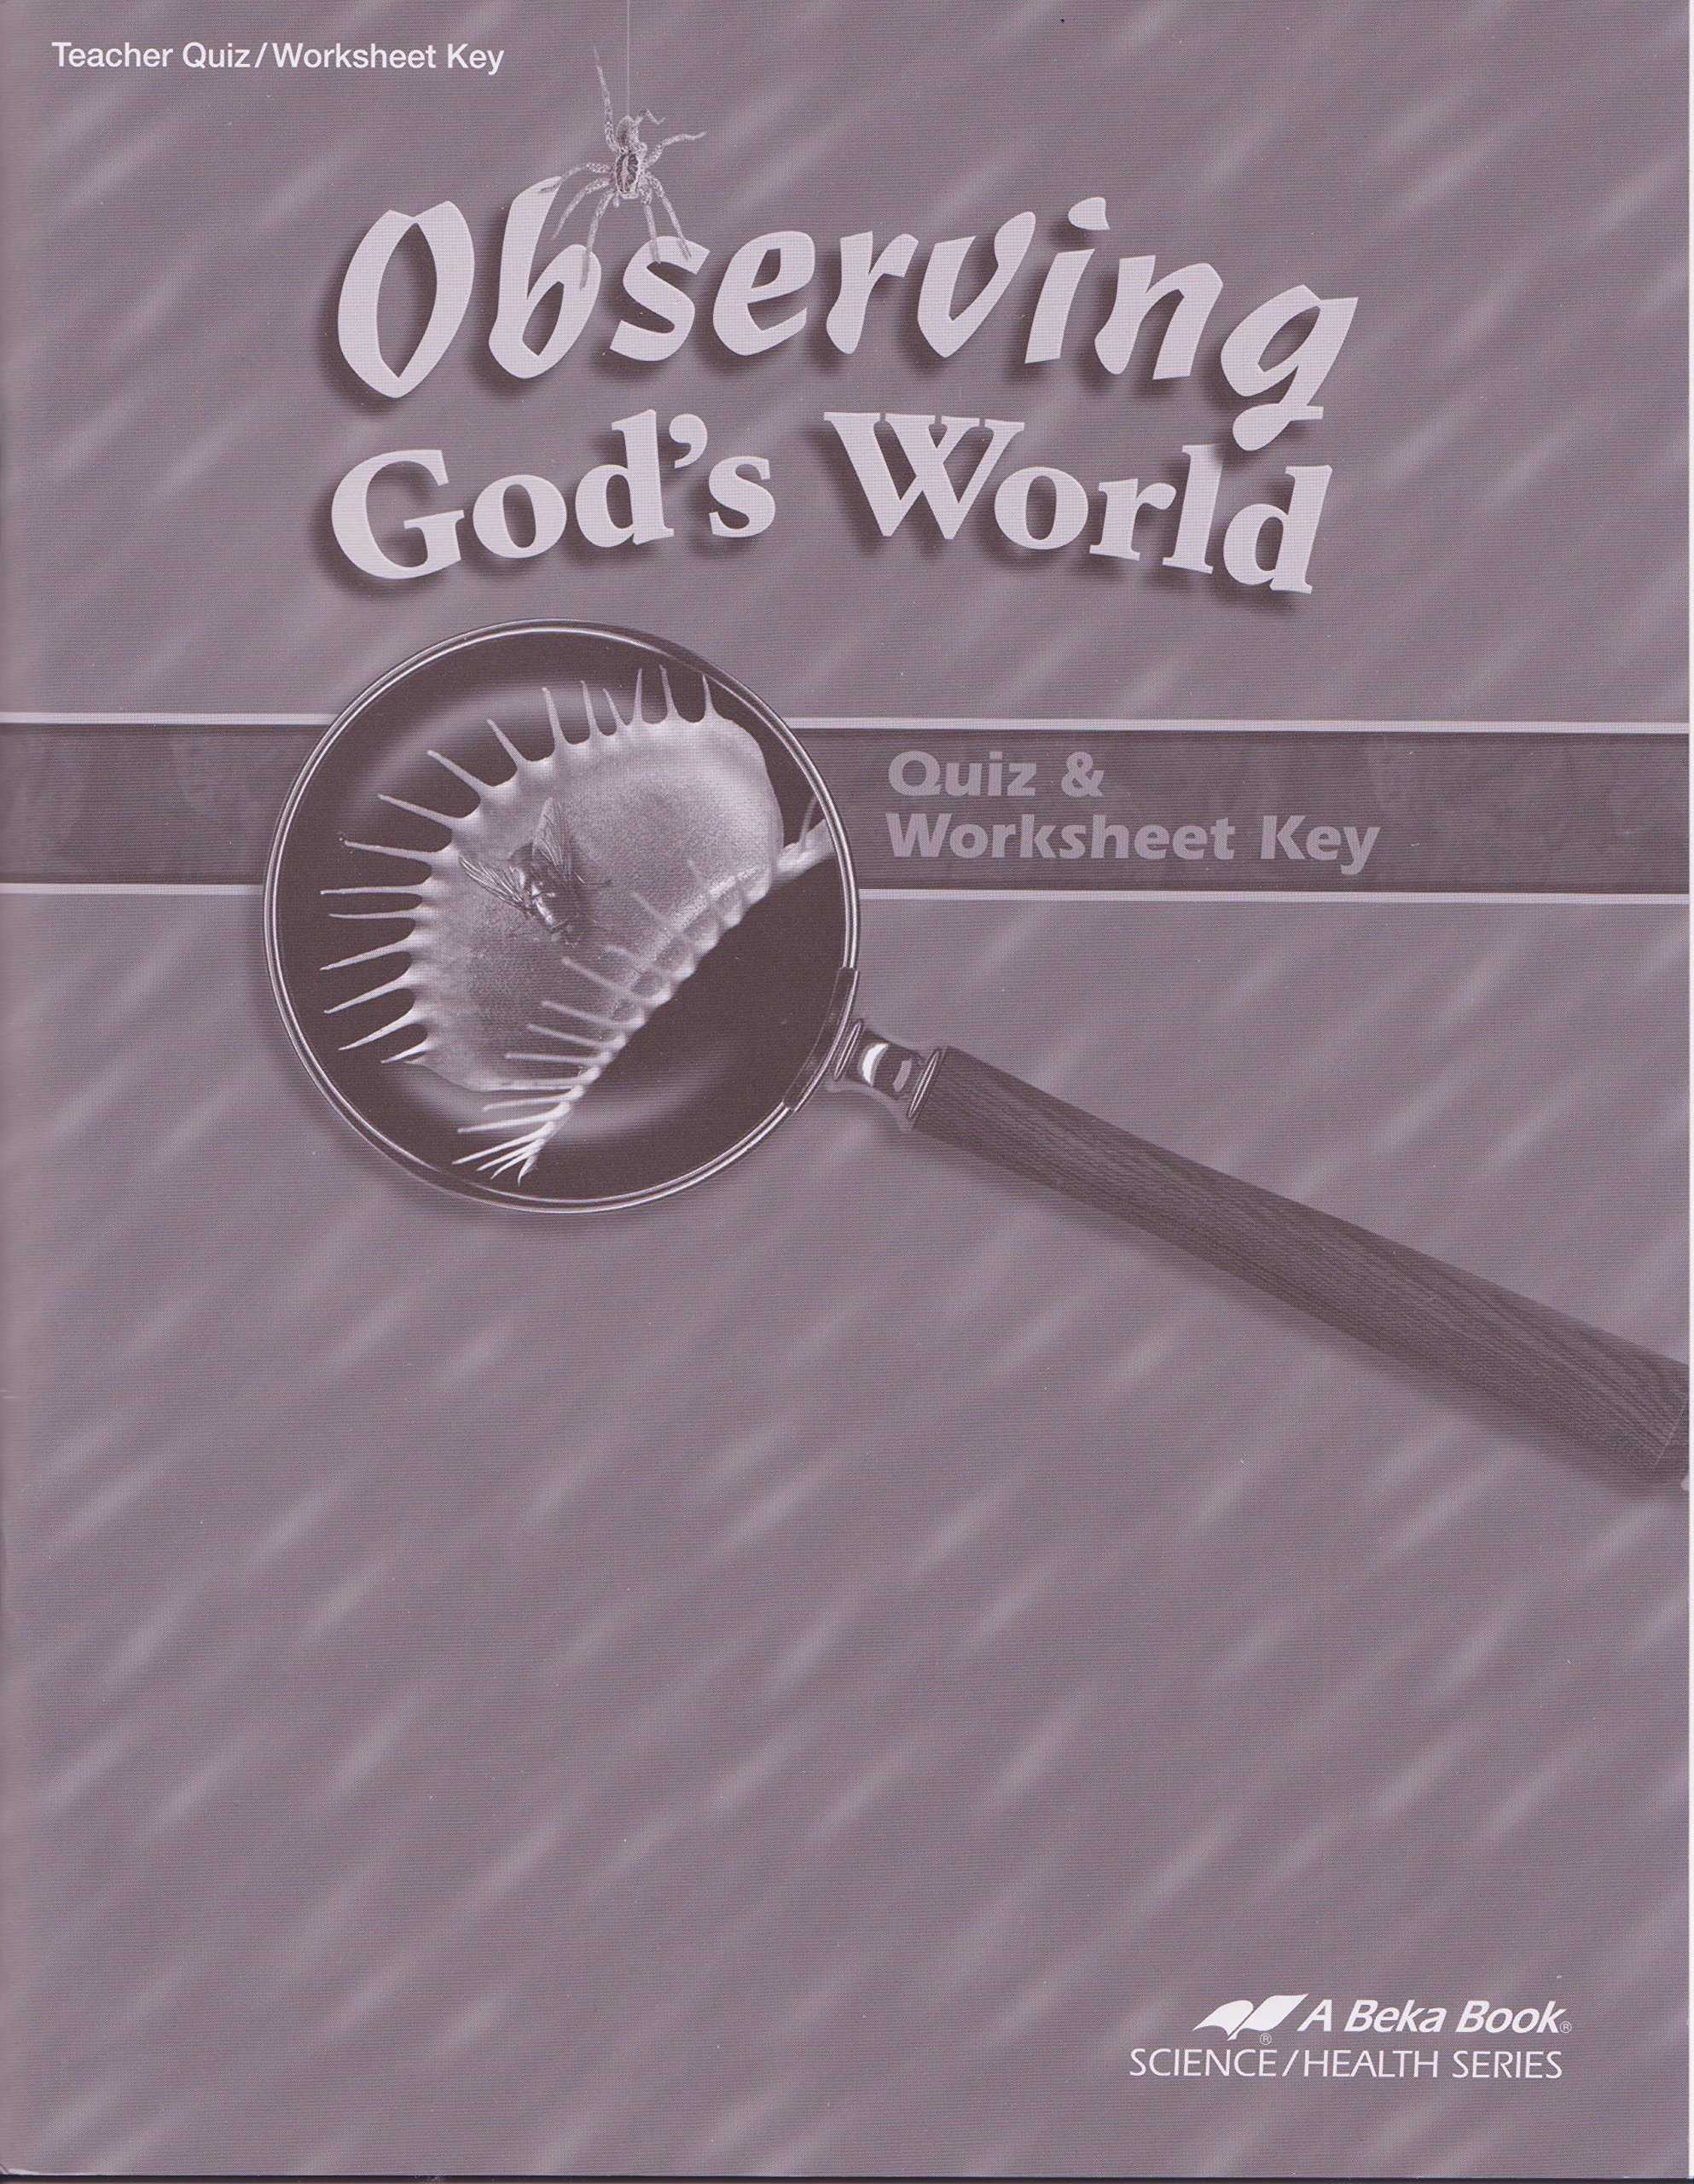 Free Fire Safety Worksheets and Observing God S World 6 Quiz & Worksheet Key A Beka Book Science